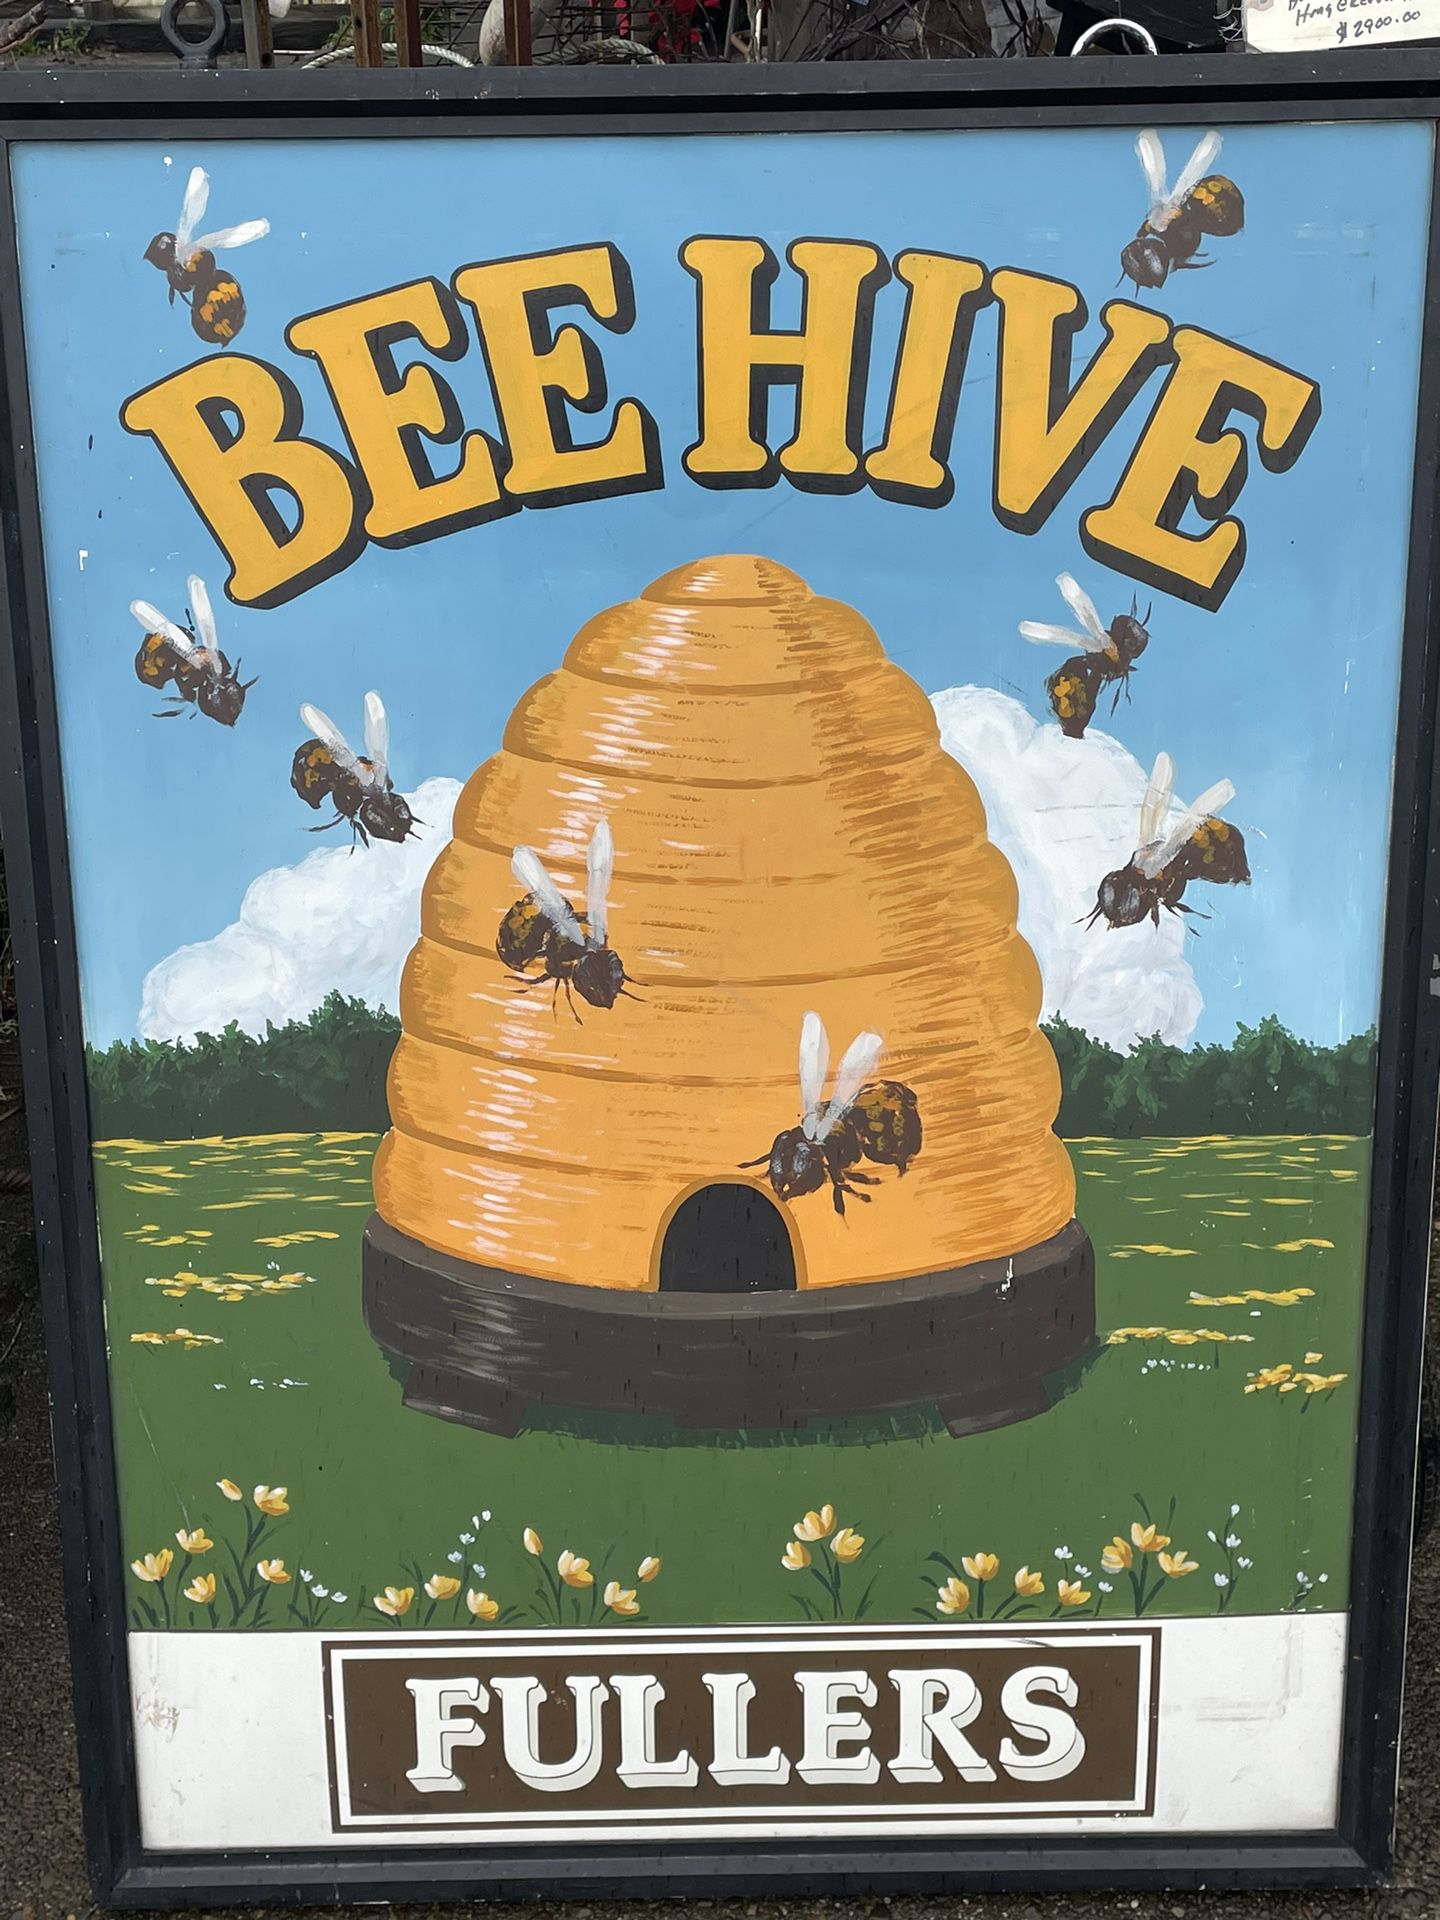 Authentic Antique British Vintage "Bee Hive" Fullers Pub Sign